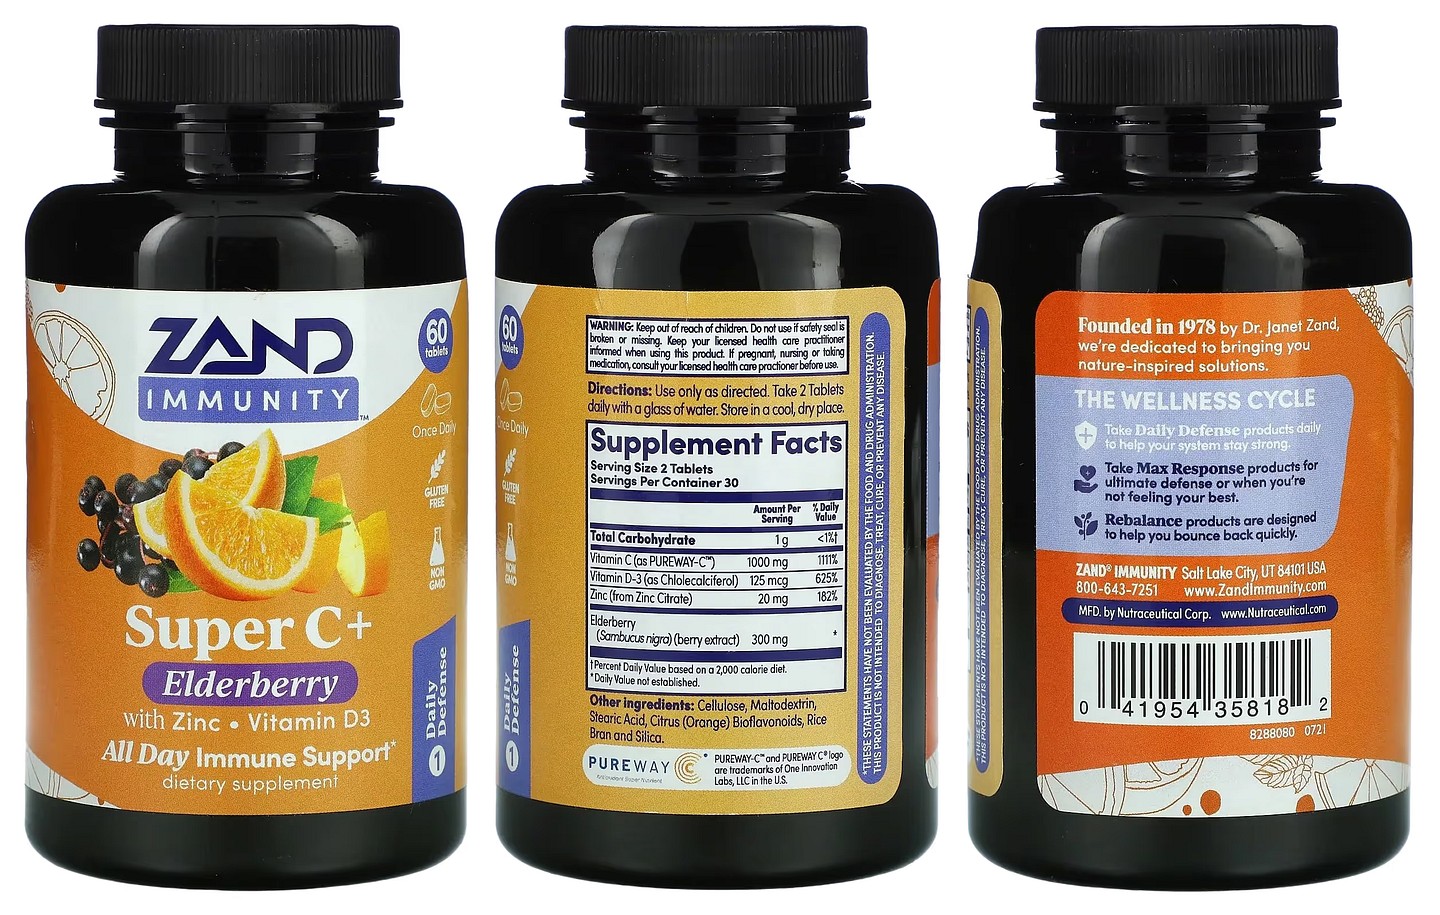 Zand, Immunity, Super C+ Elderberry with Zinc/Vitamin D3 packaging